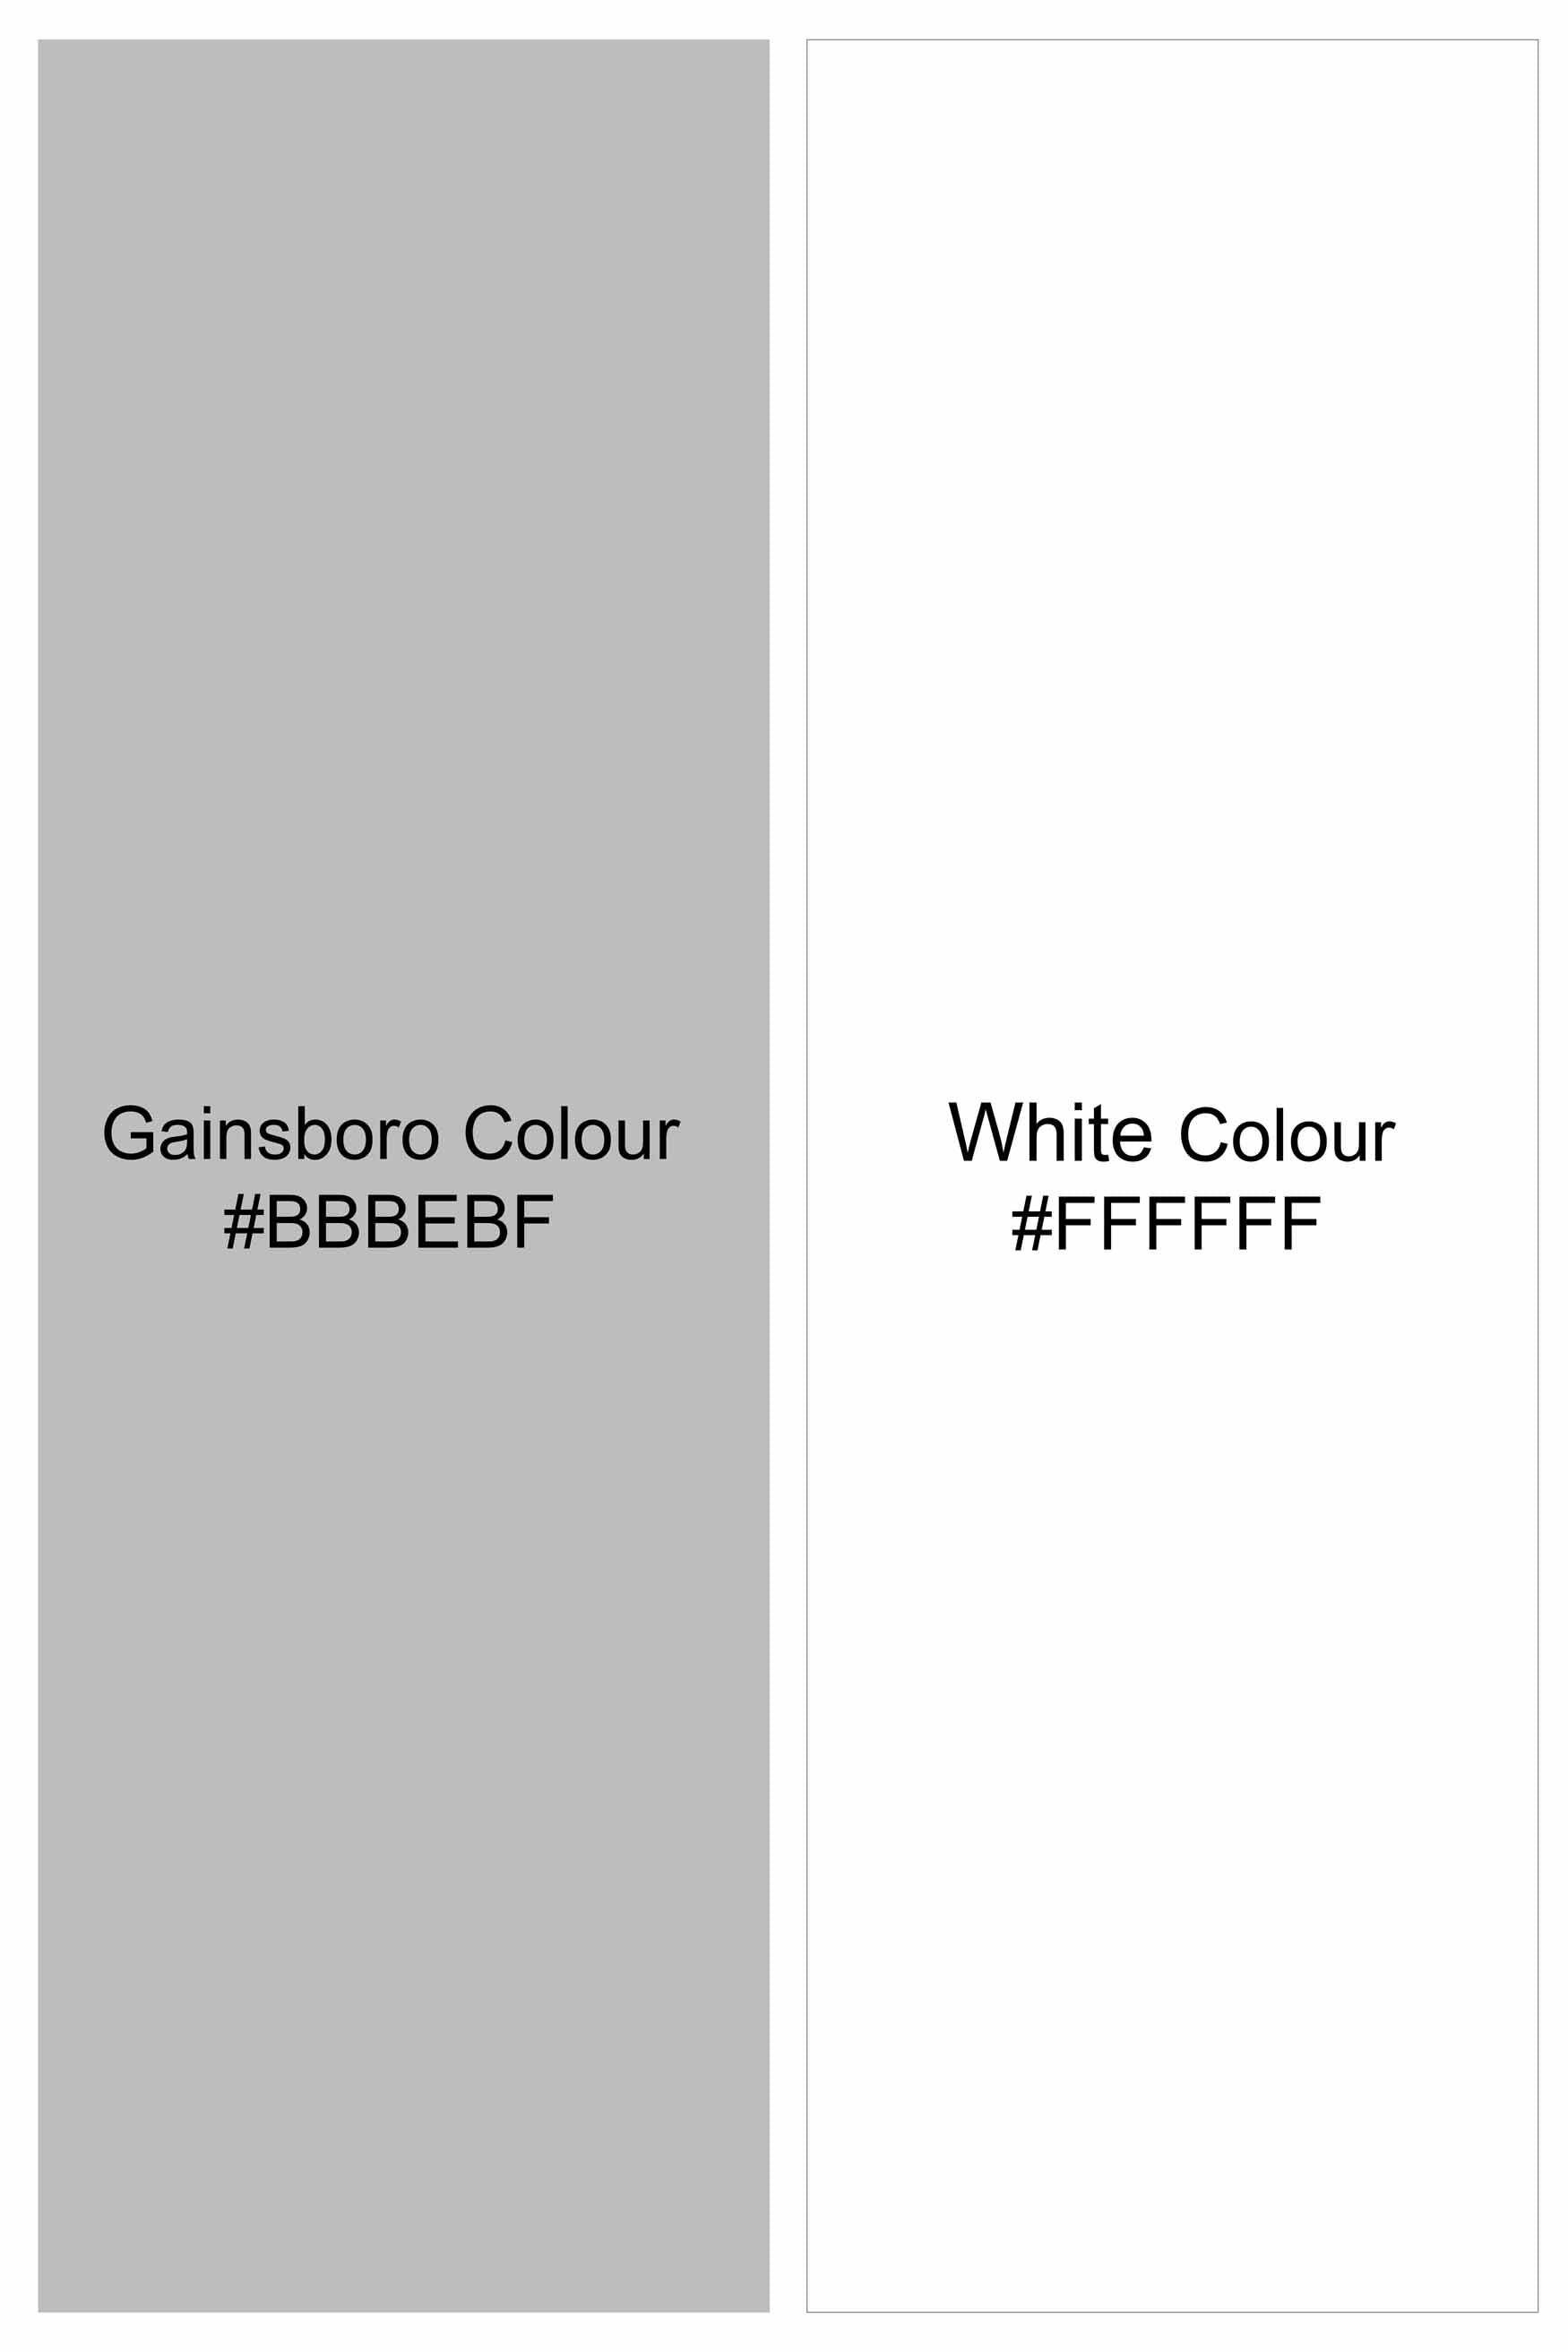 Gainsboro Gray Striped with White Cuffs and Collar Premium Cotton Shirt